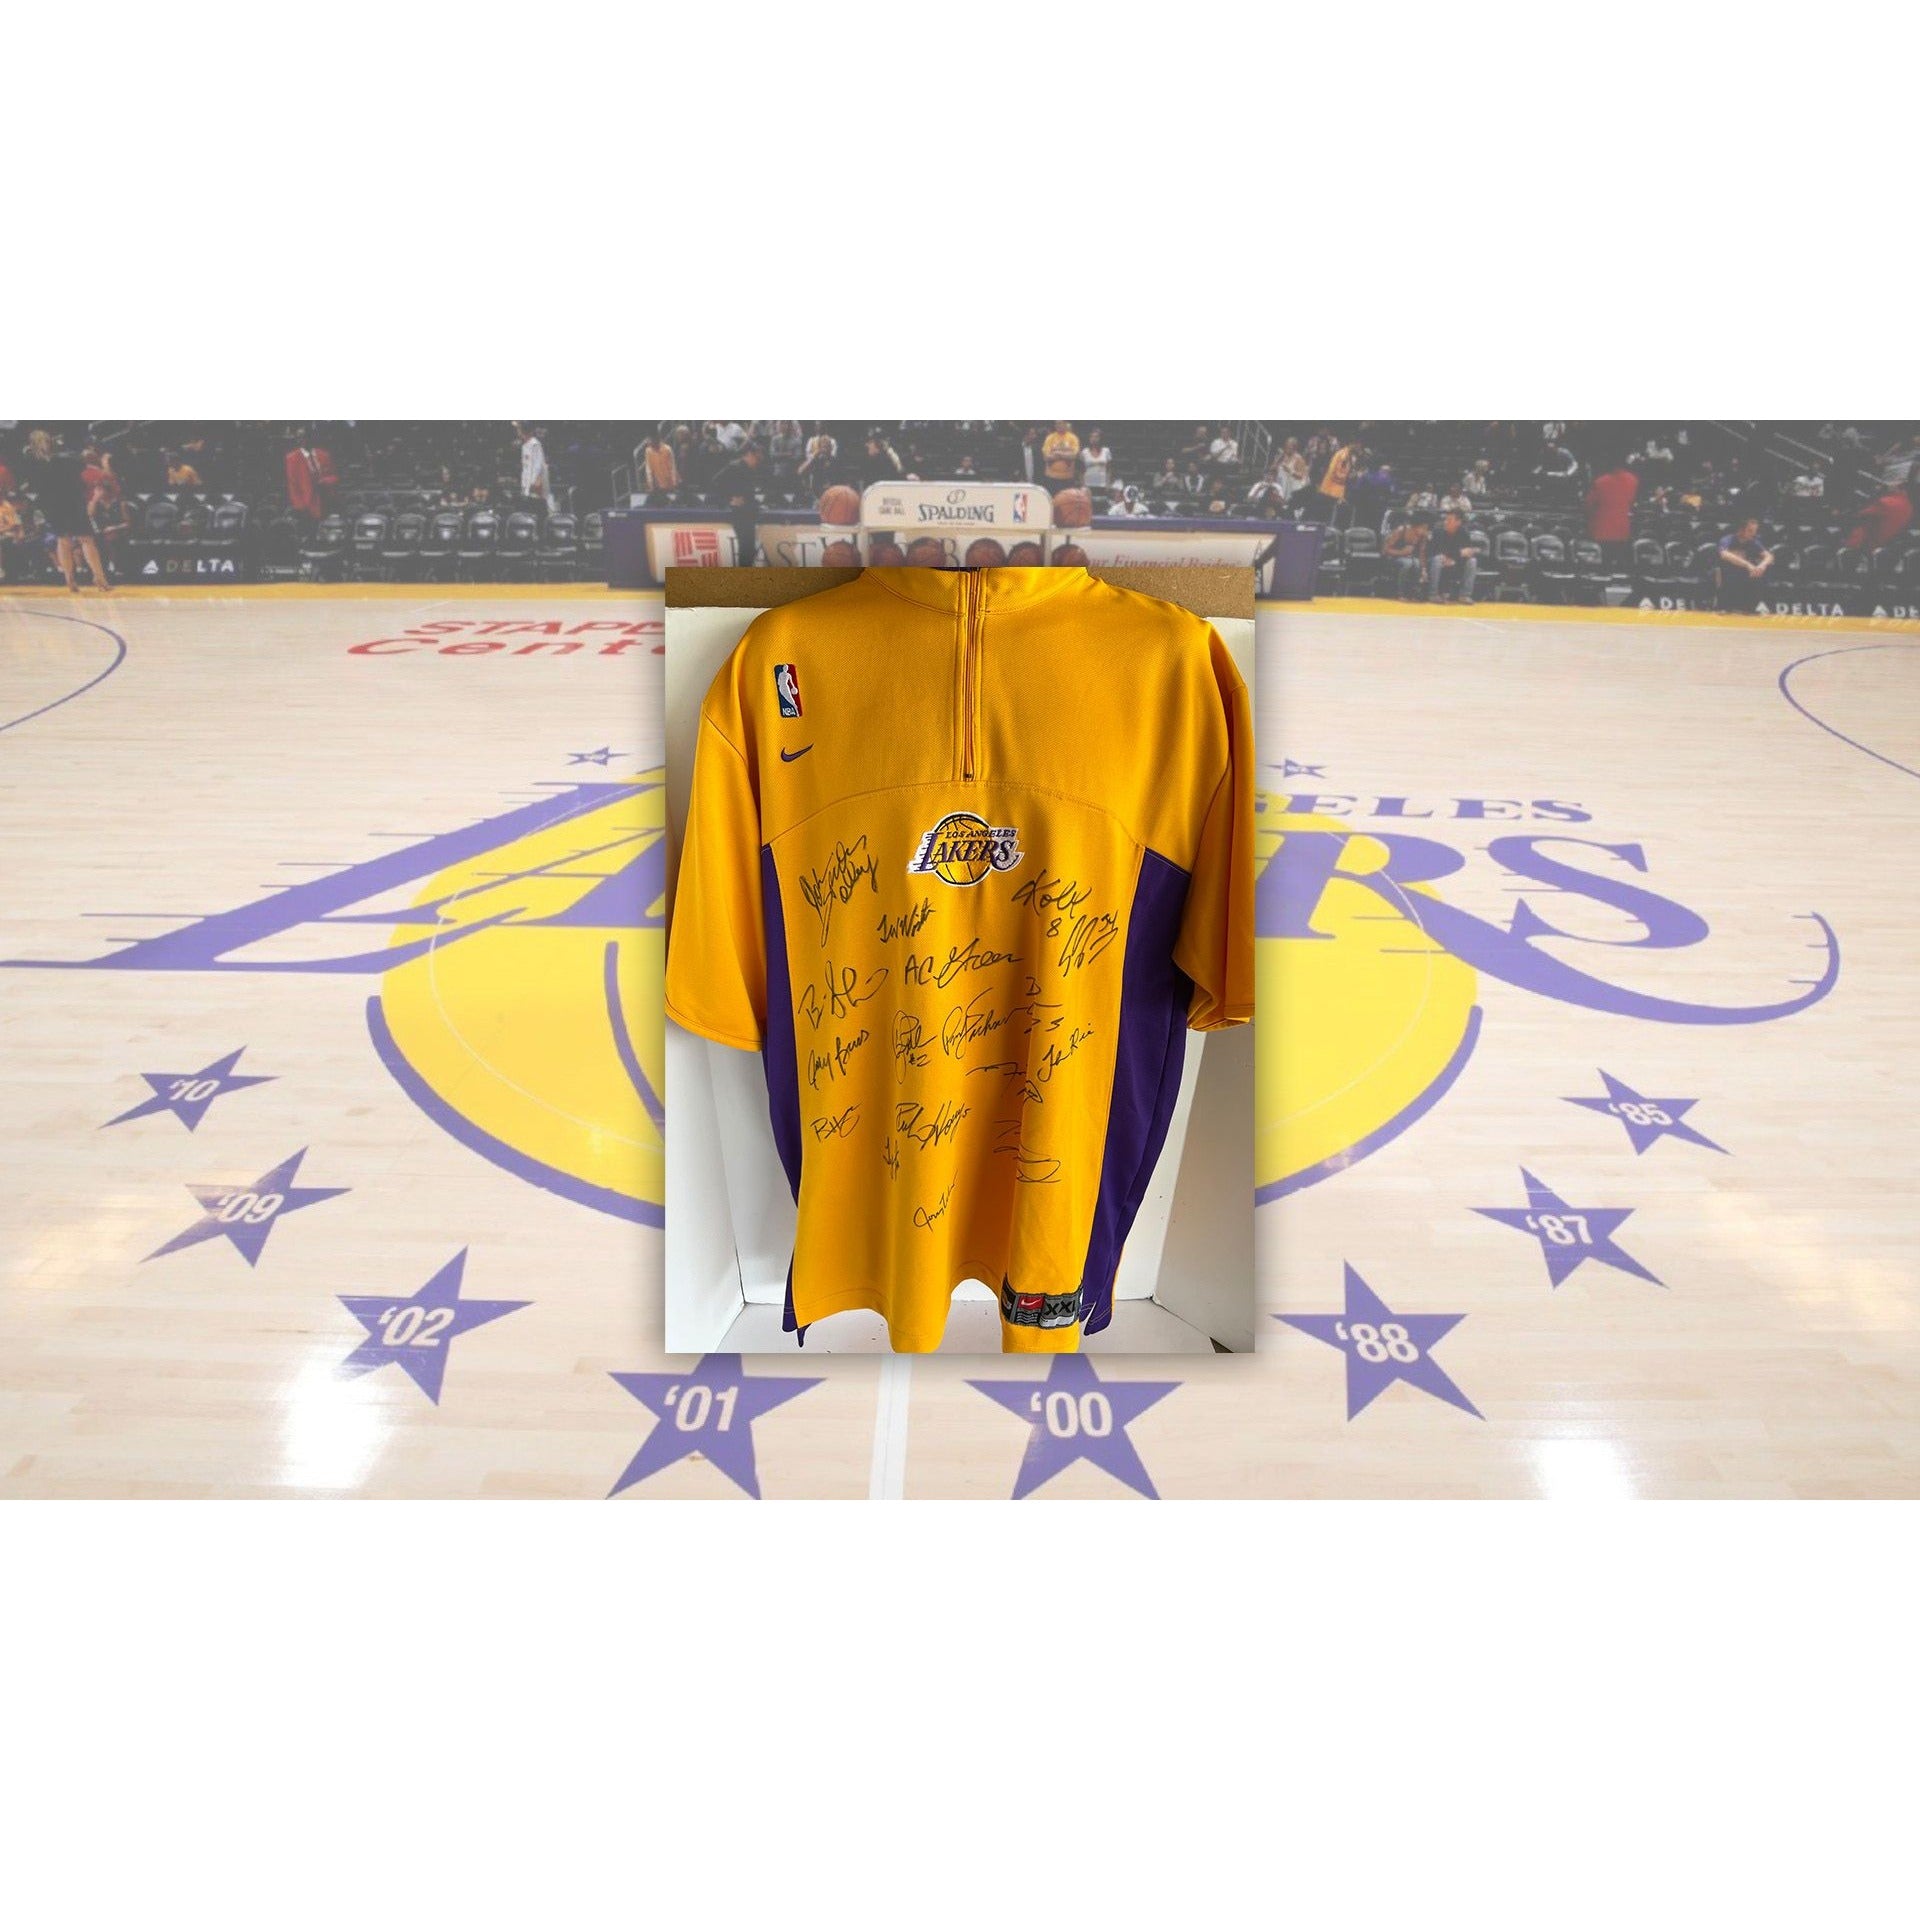 2000 LA Lakers NBA Champions T-shirt